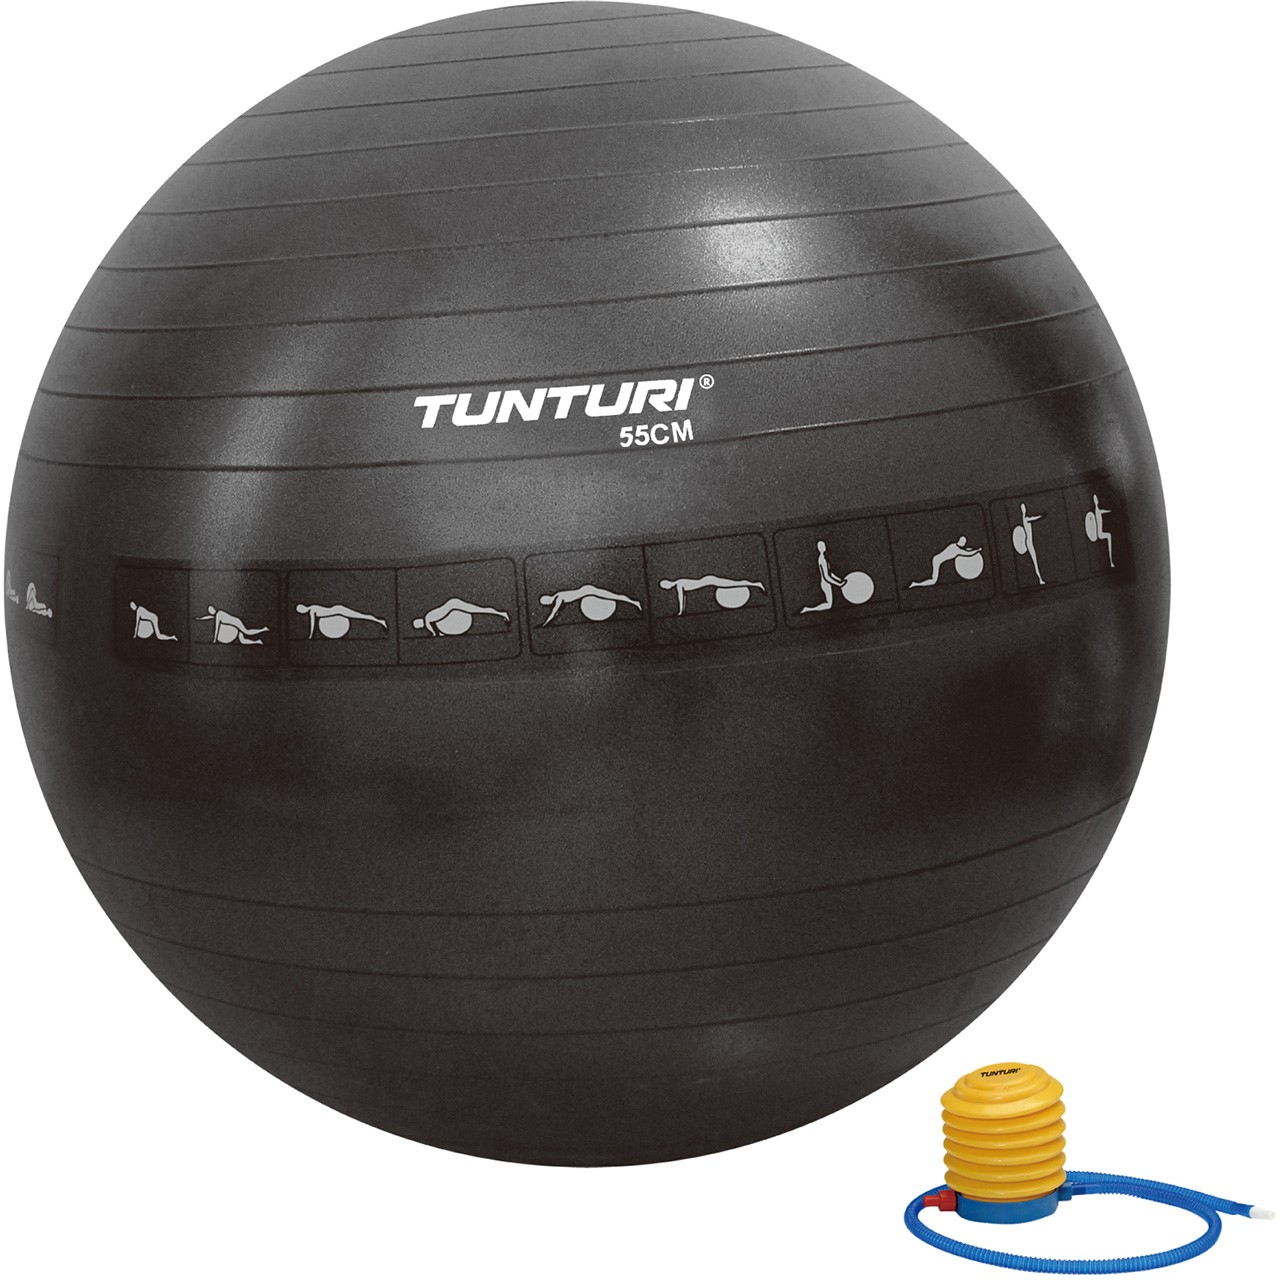 Tunturi Anti-Burst Gym Ball 55 cm